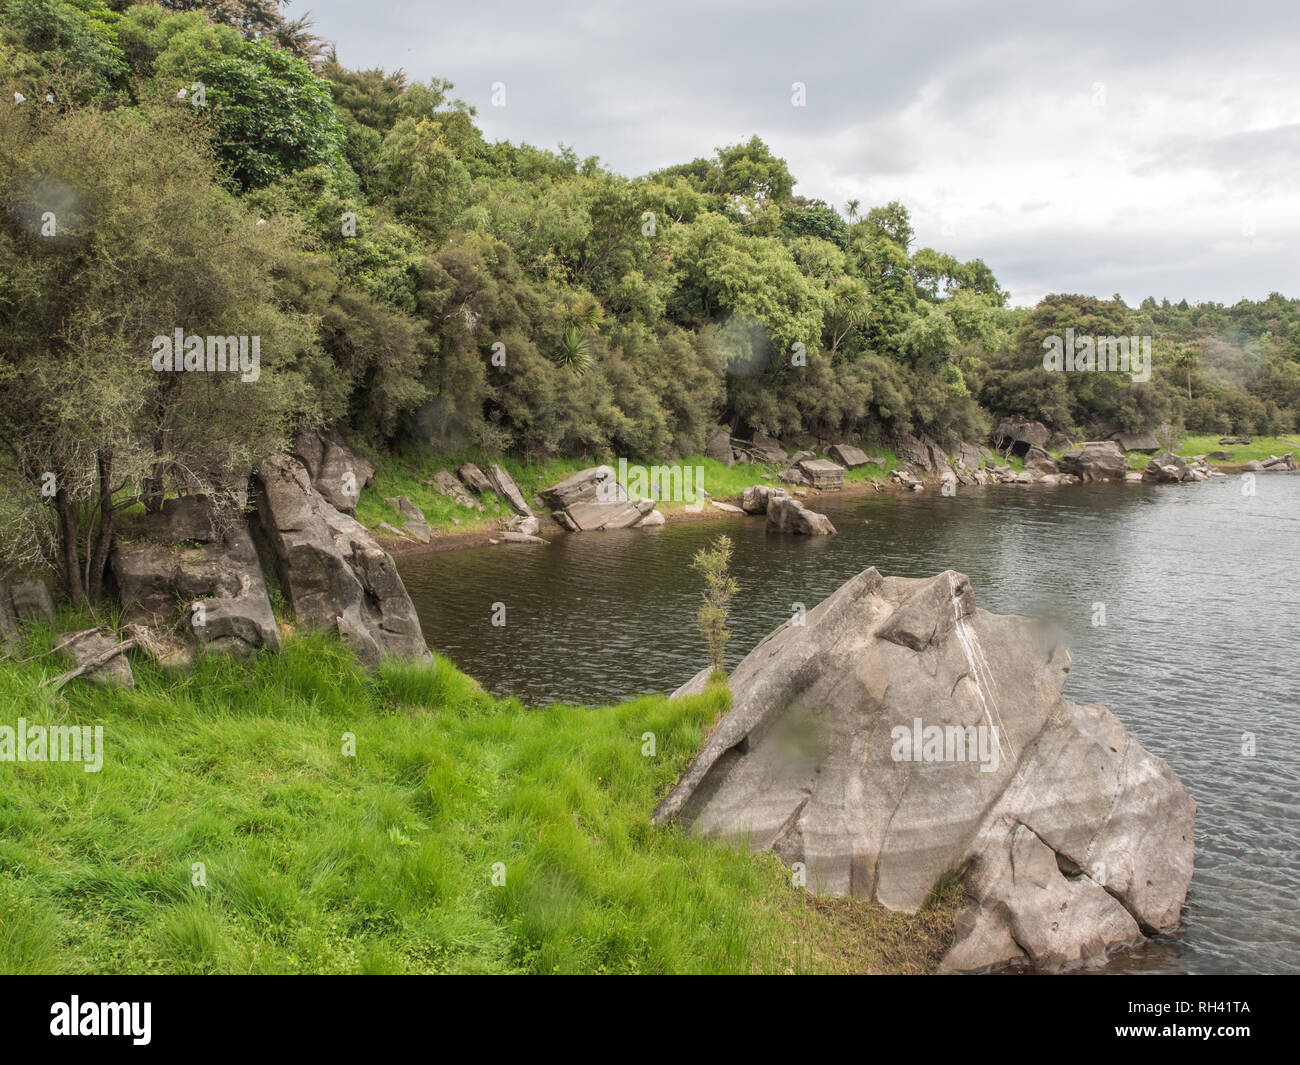 Ephemeral wetland in summer, beautiful peaceful landscape, natural environment, Lake Kiriopukae, Te Urewera National Park, North Island, New Zealand Stock Photo